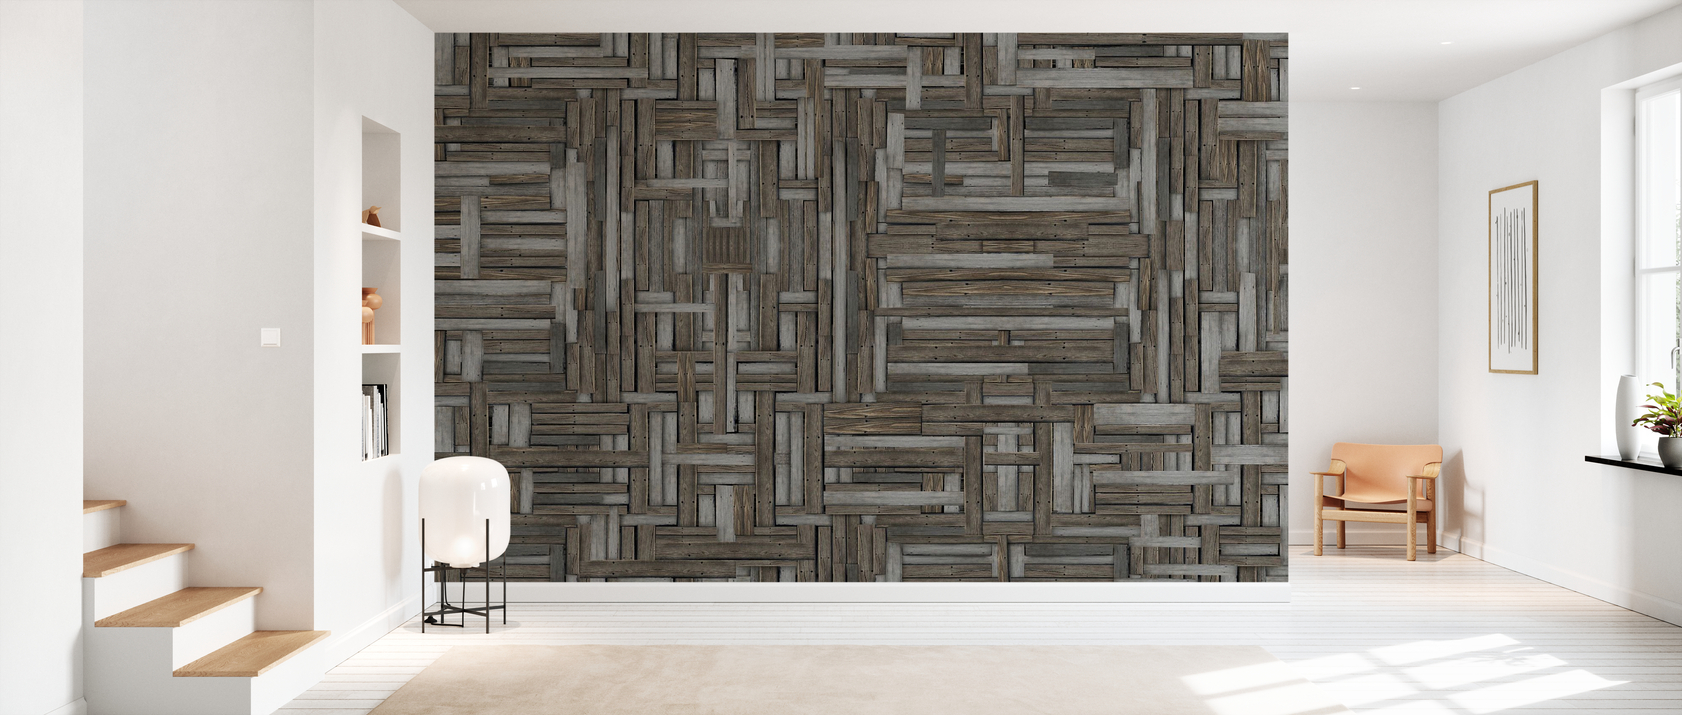 Geometric Wallpaper Forest Pattern Wall Mural Retro Trigon Wall Print Modern Home Decor Cafe Design Entryway